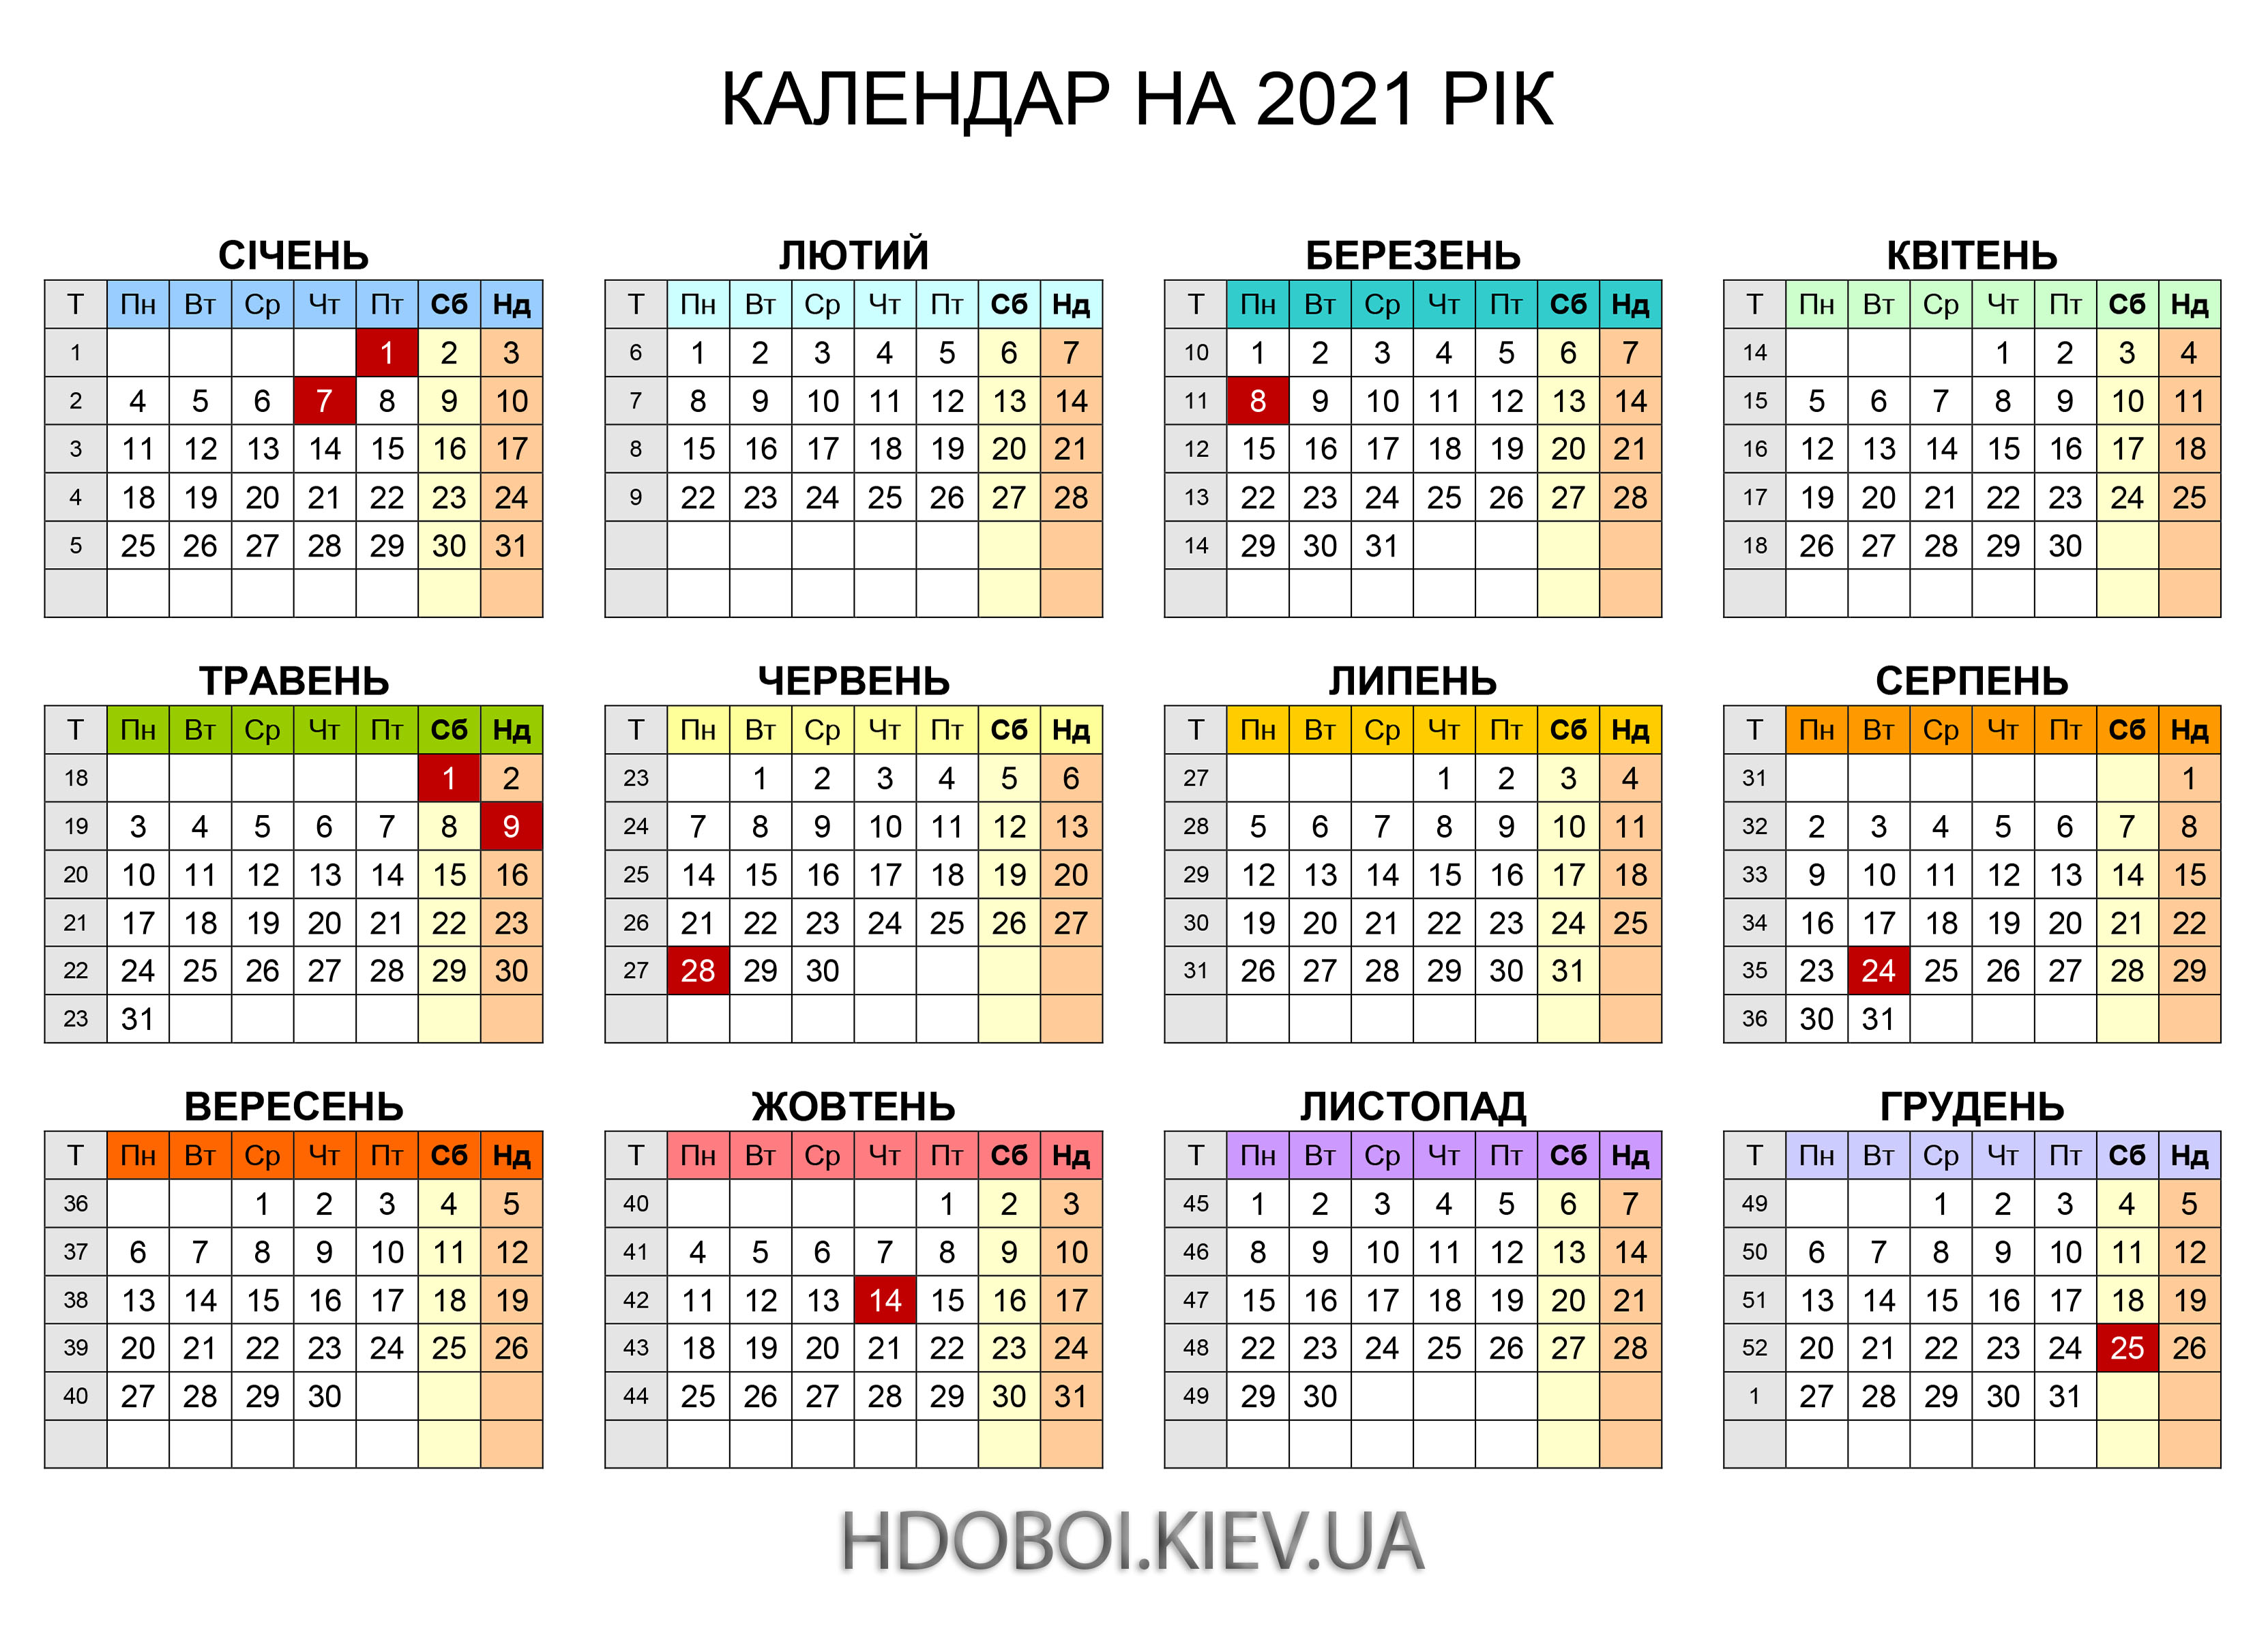 HDoboi.Kiev.ua - Календар 2021 Україна зі святами